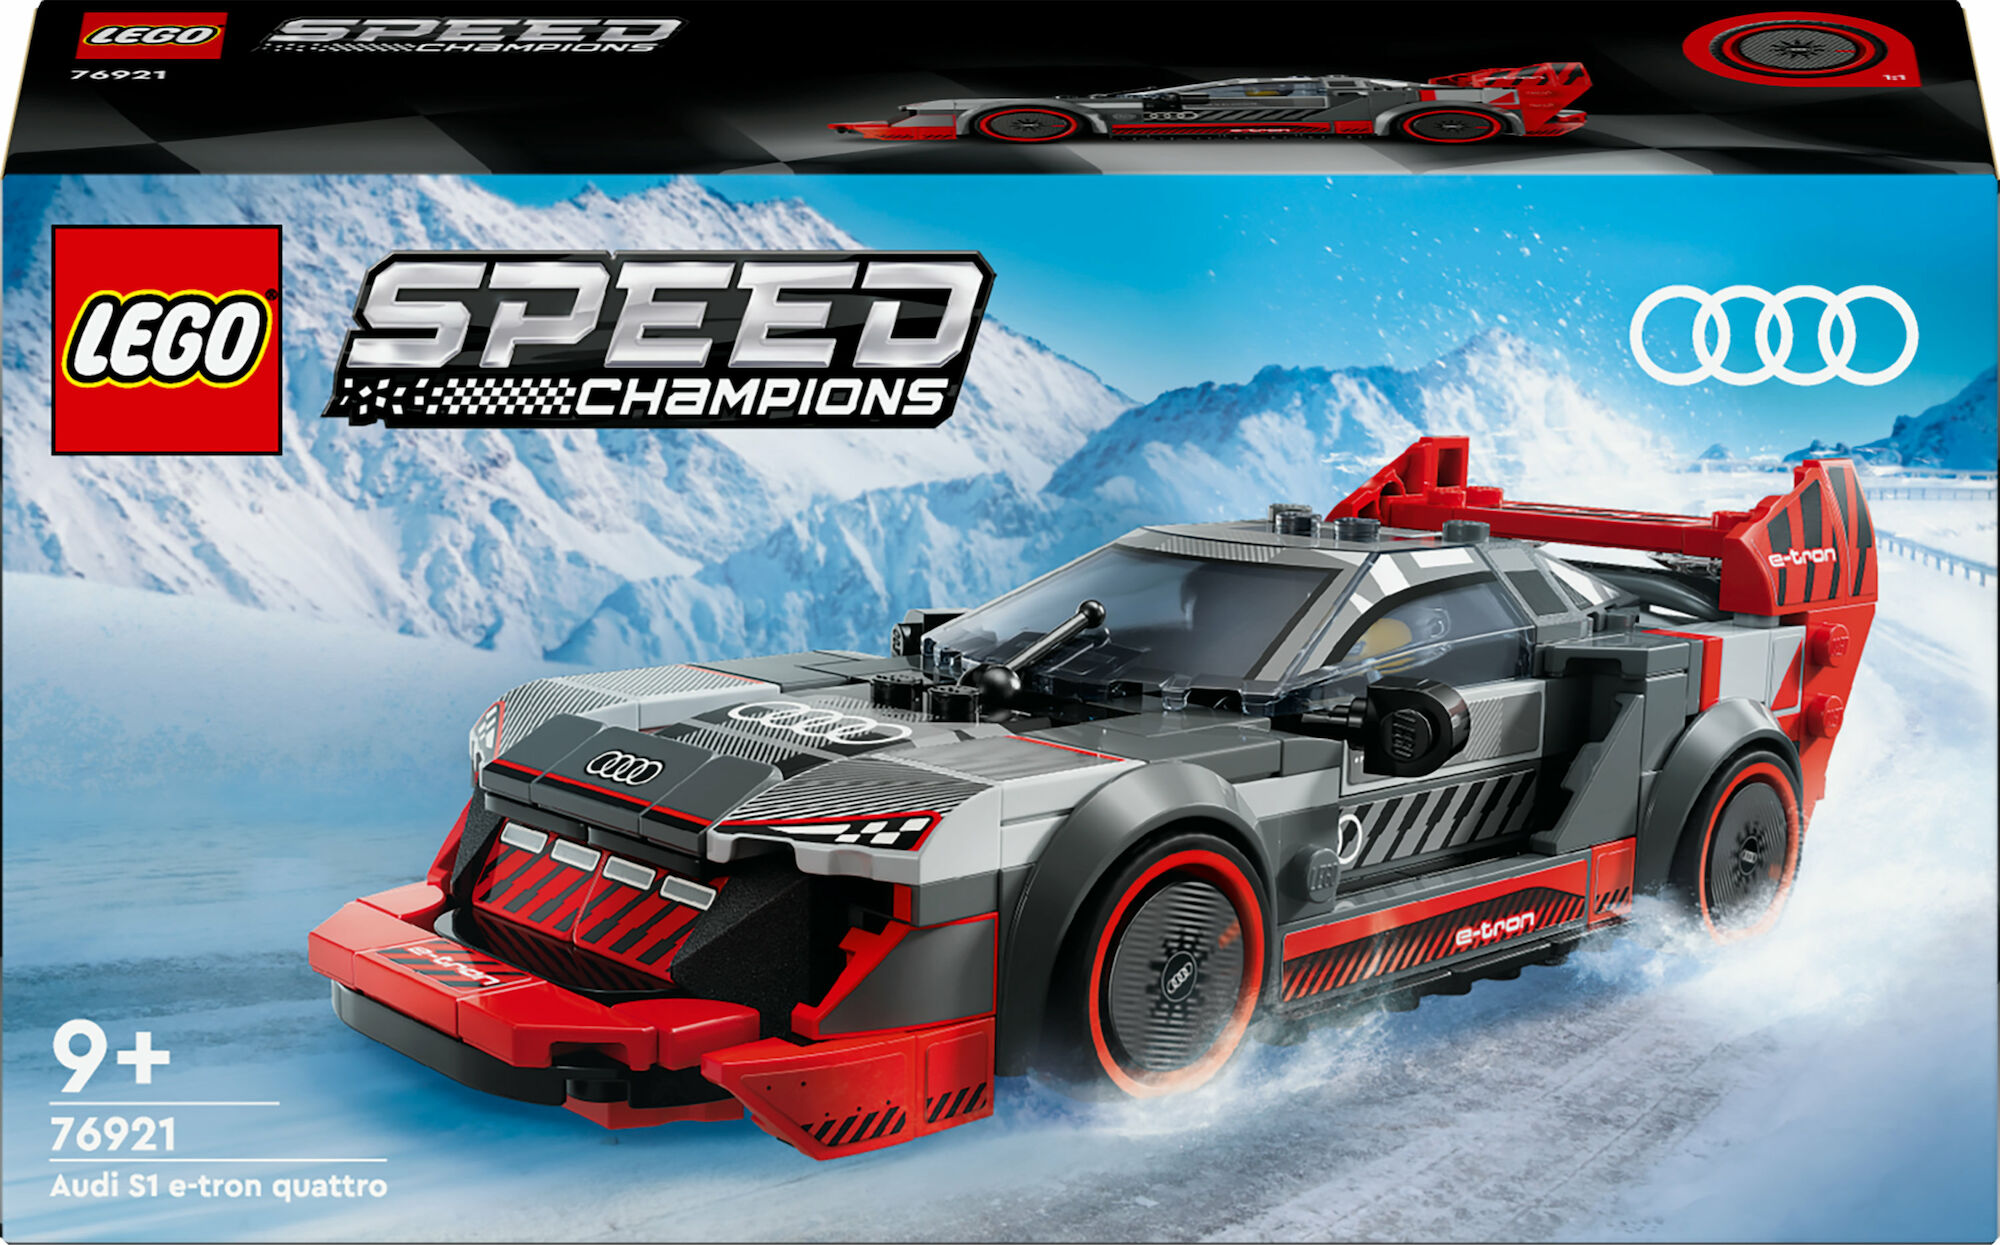 LEGO Speed Champions 76921 Audi S1 e-tron quattro racerbil